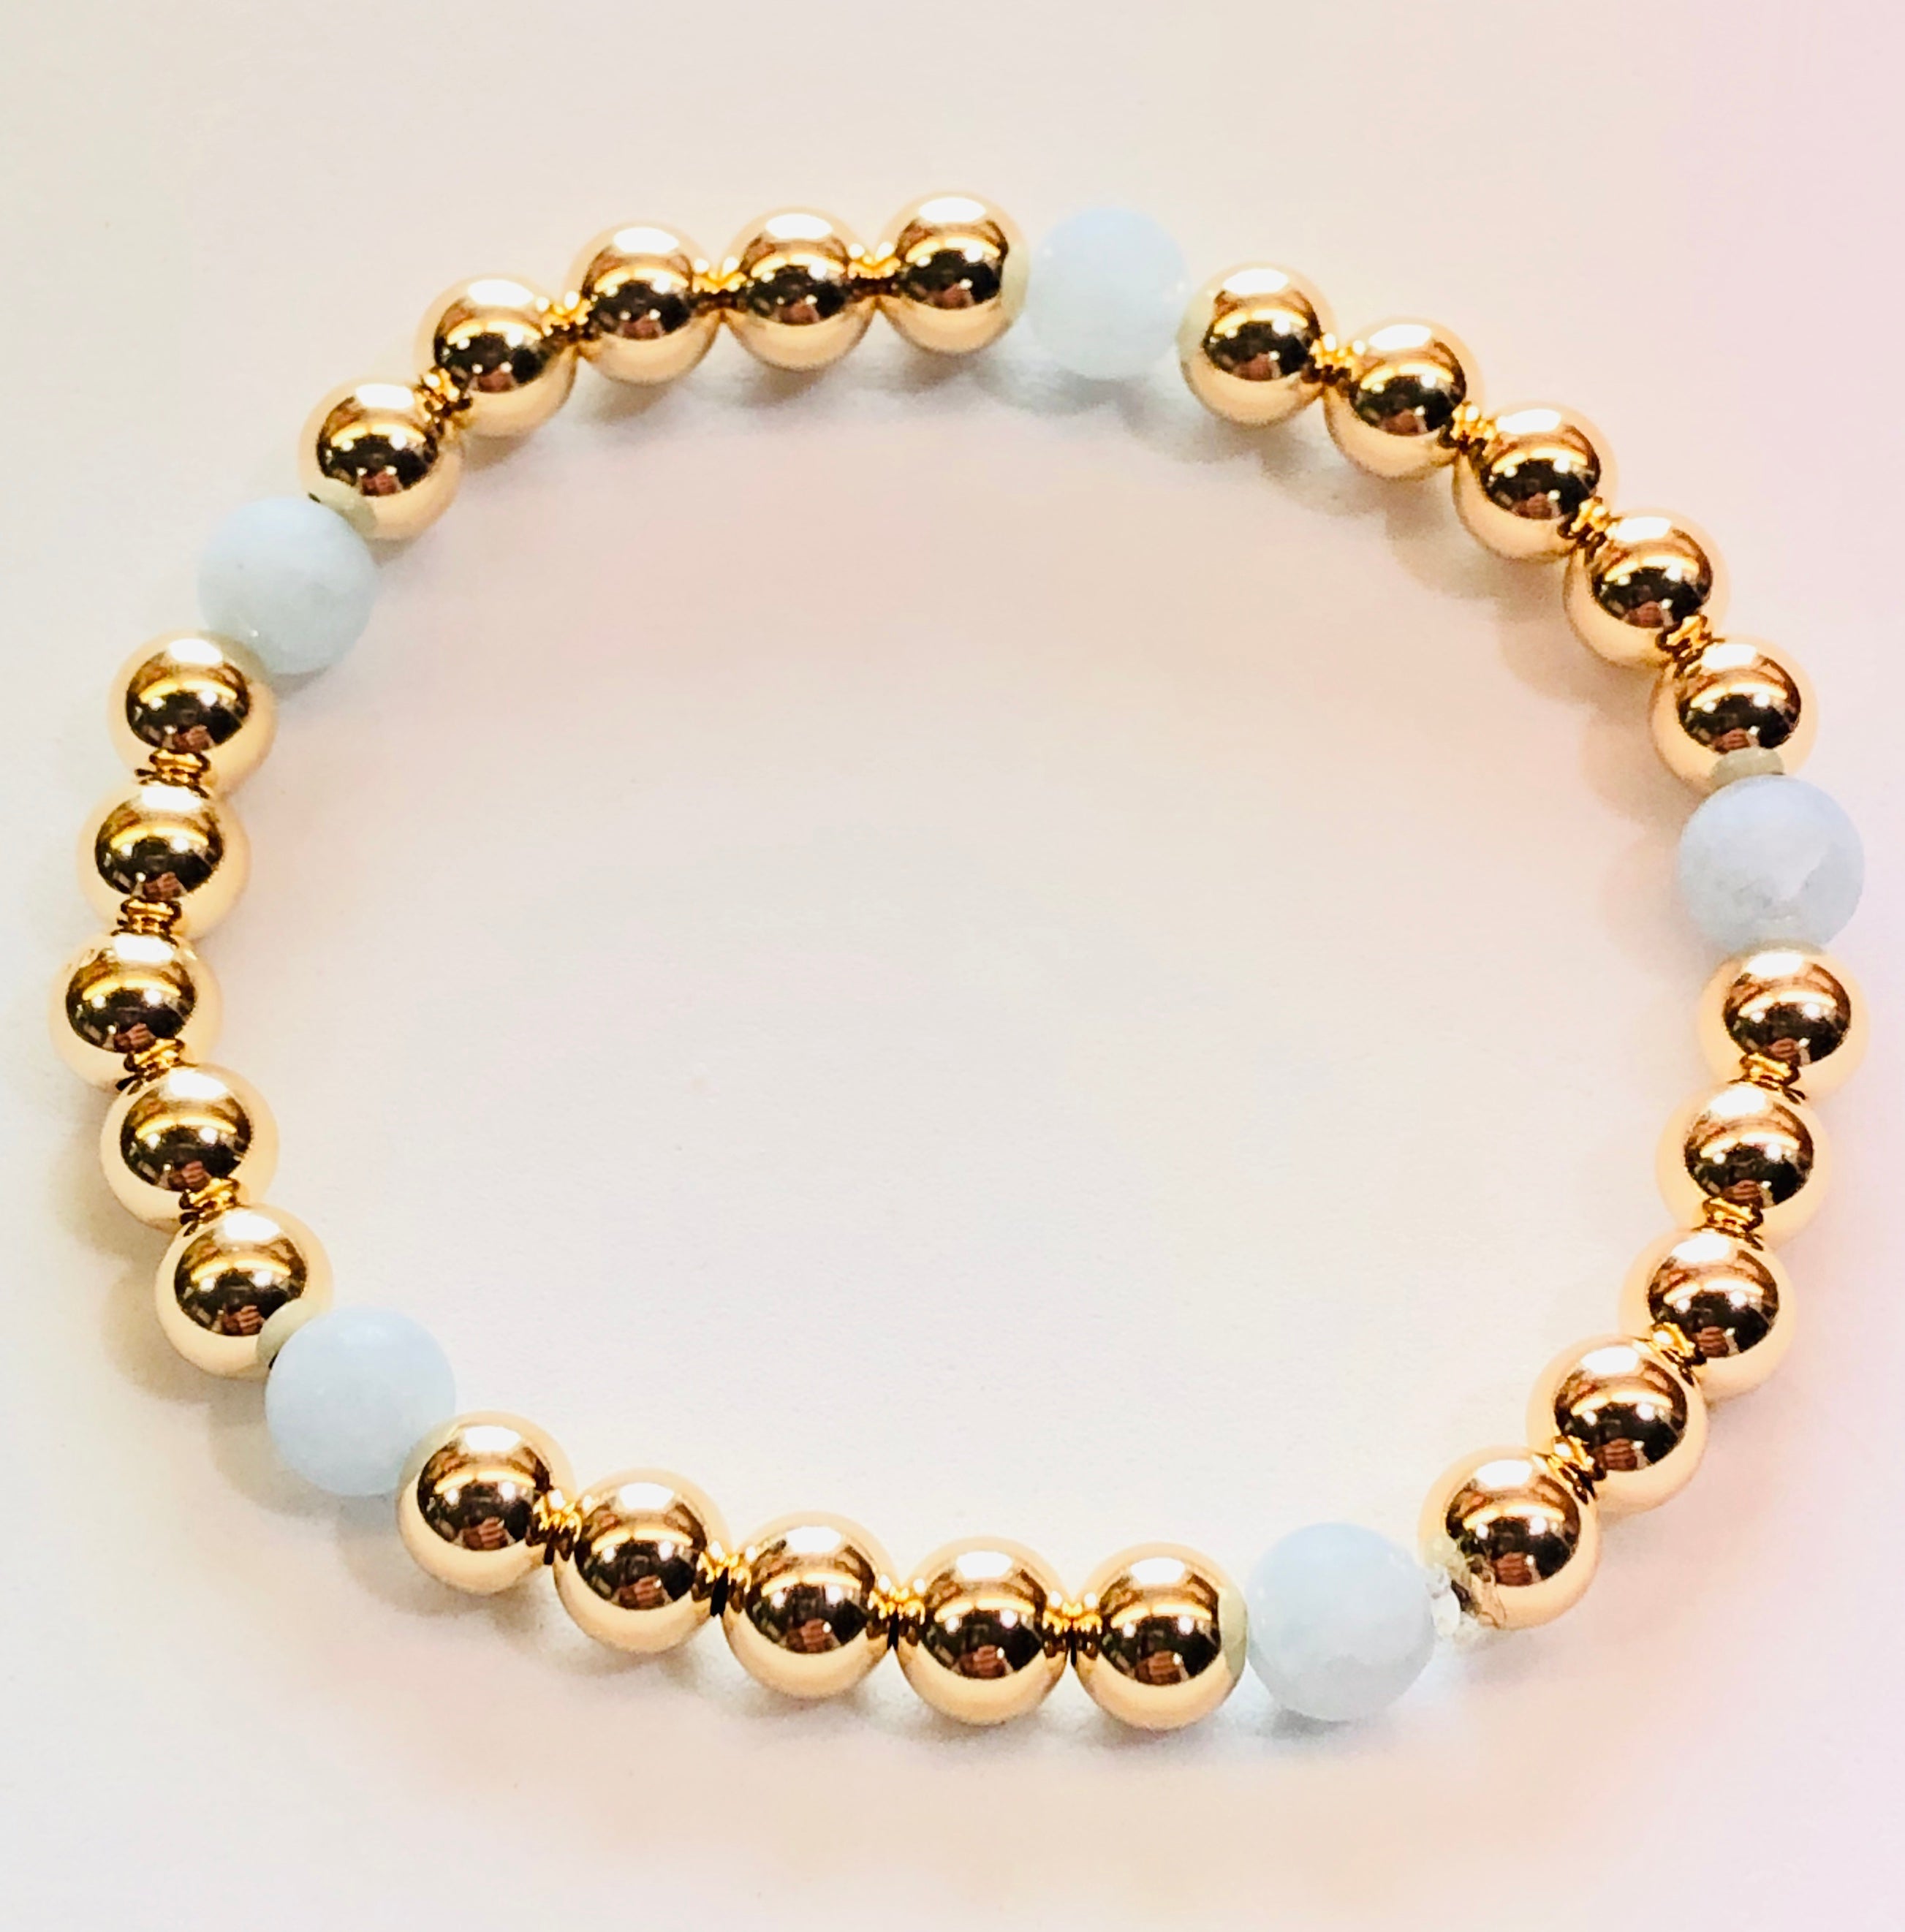 6mm 14kt Gold Filled Bead Bracelet with 5 Matte Finish Aquamarine Beads